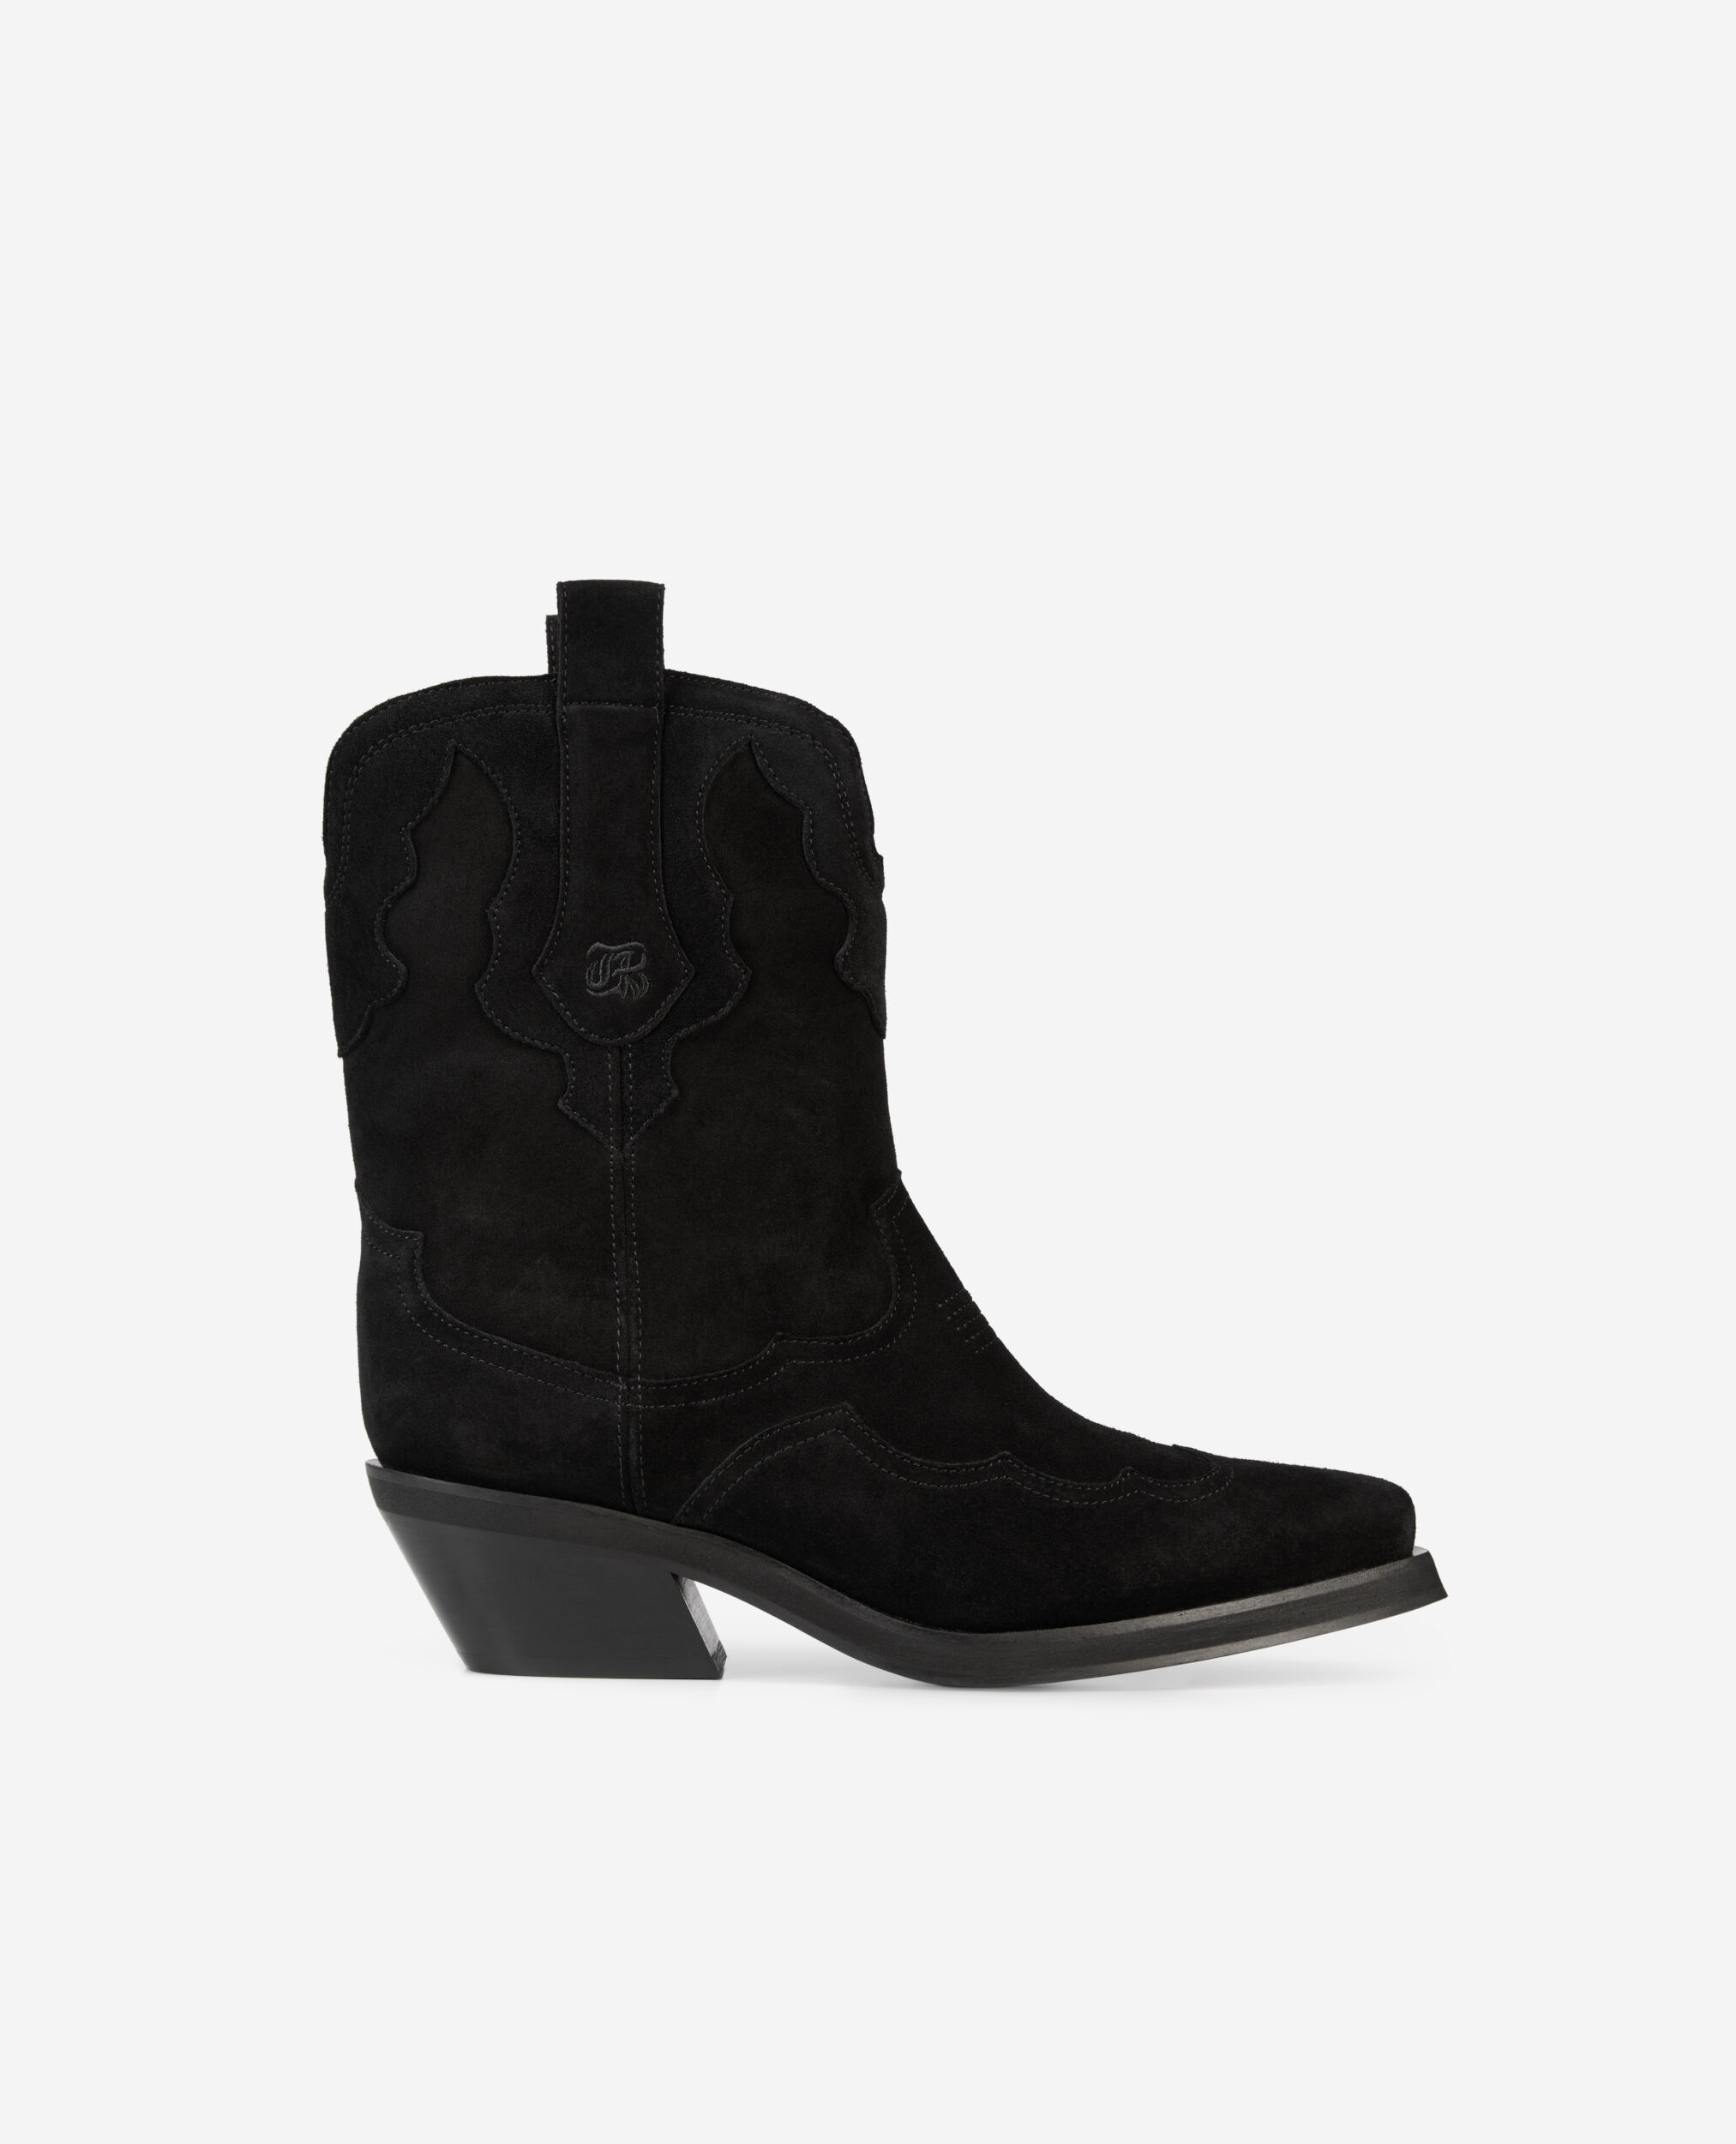 Black suede leather Western boots, BLACK, hi-res image number null